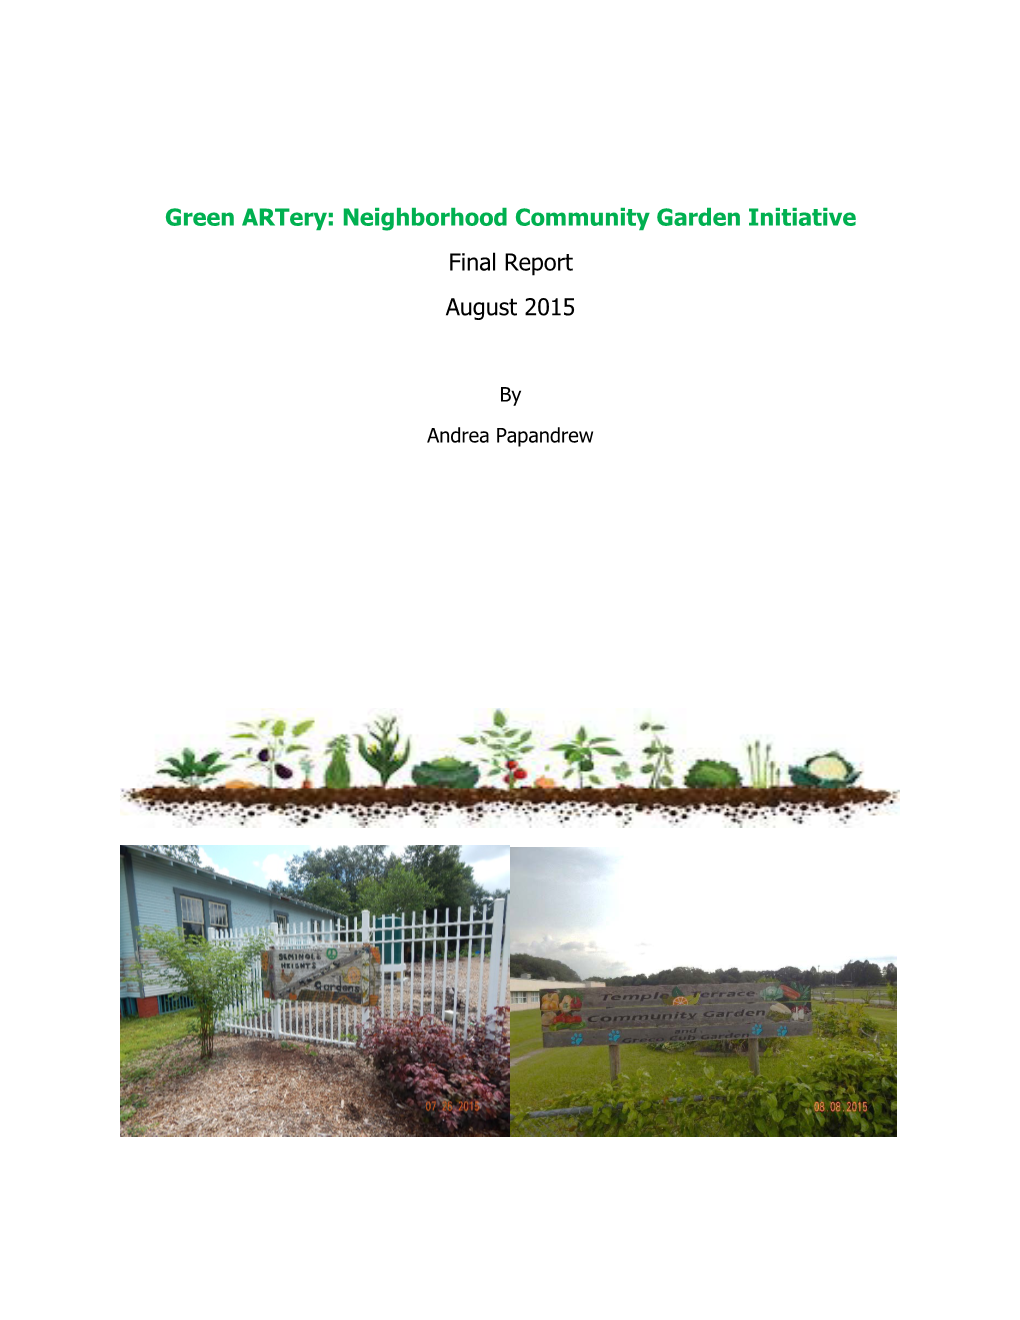 Green Artery: Neighborhood Community Garden Initiative Final Report August 2015